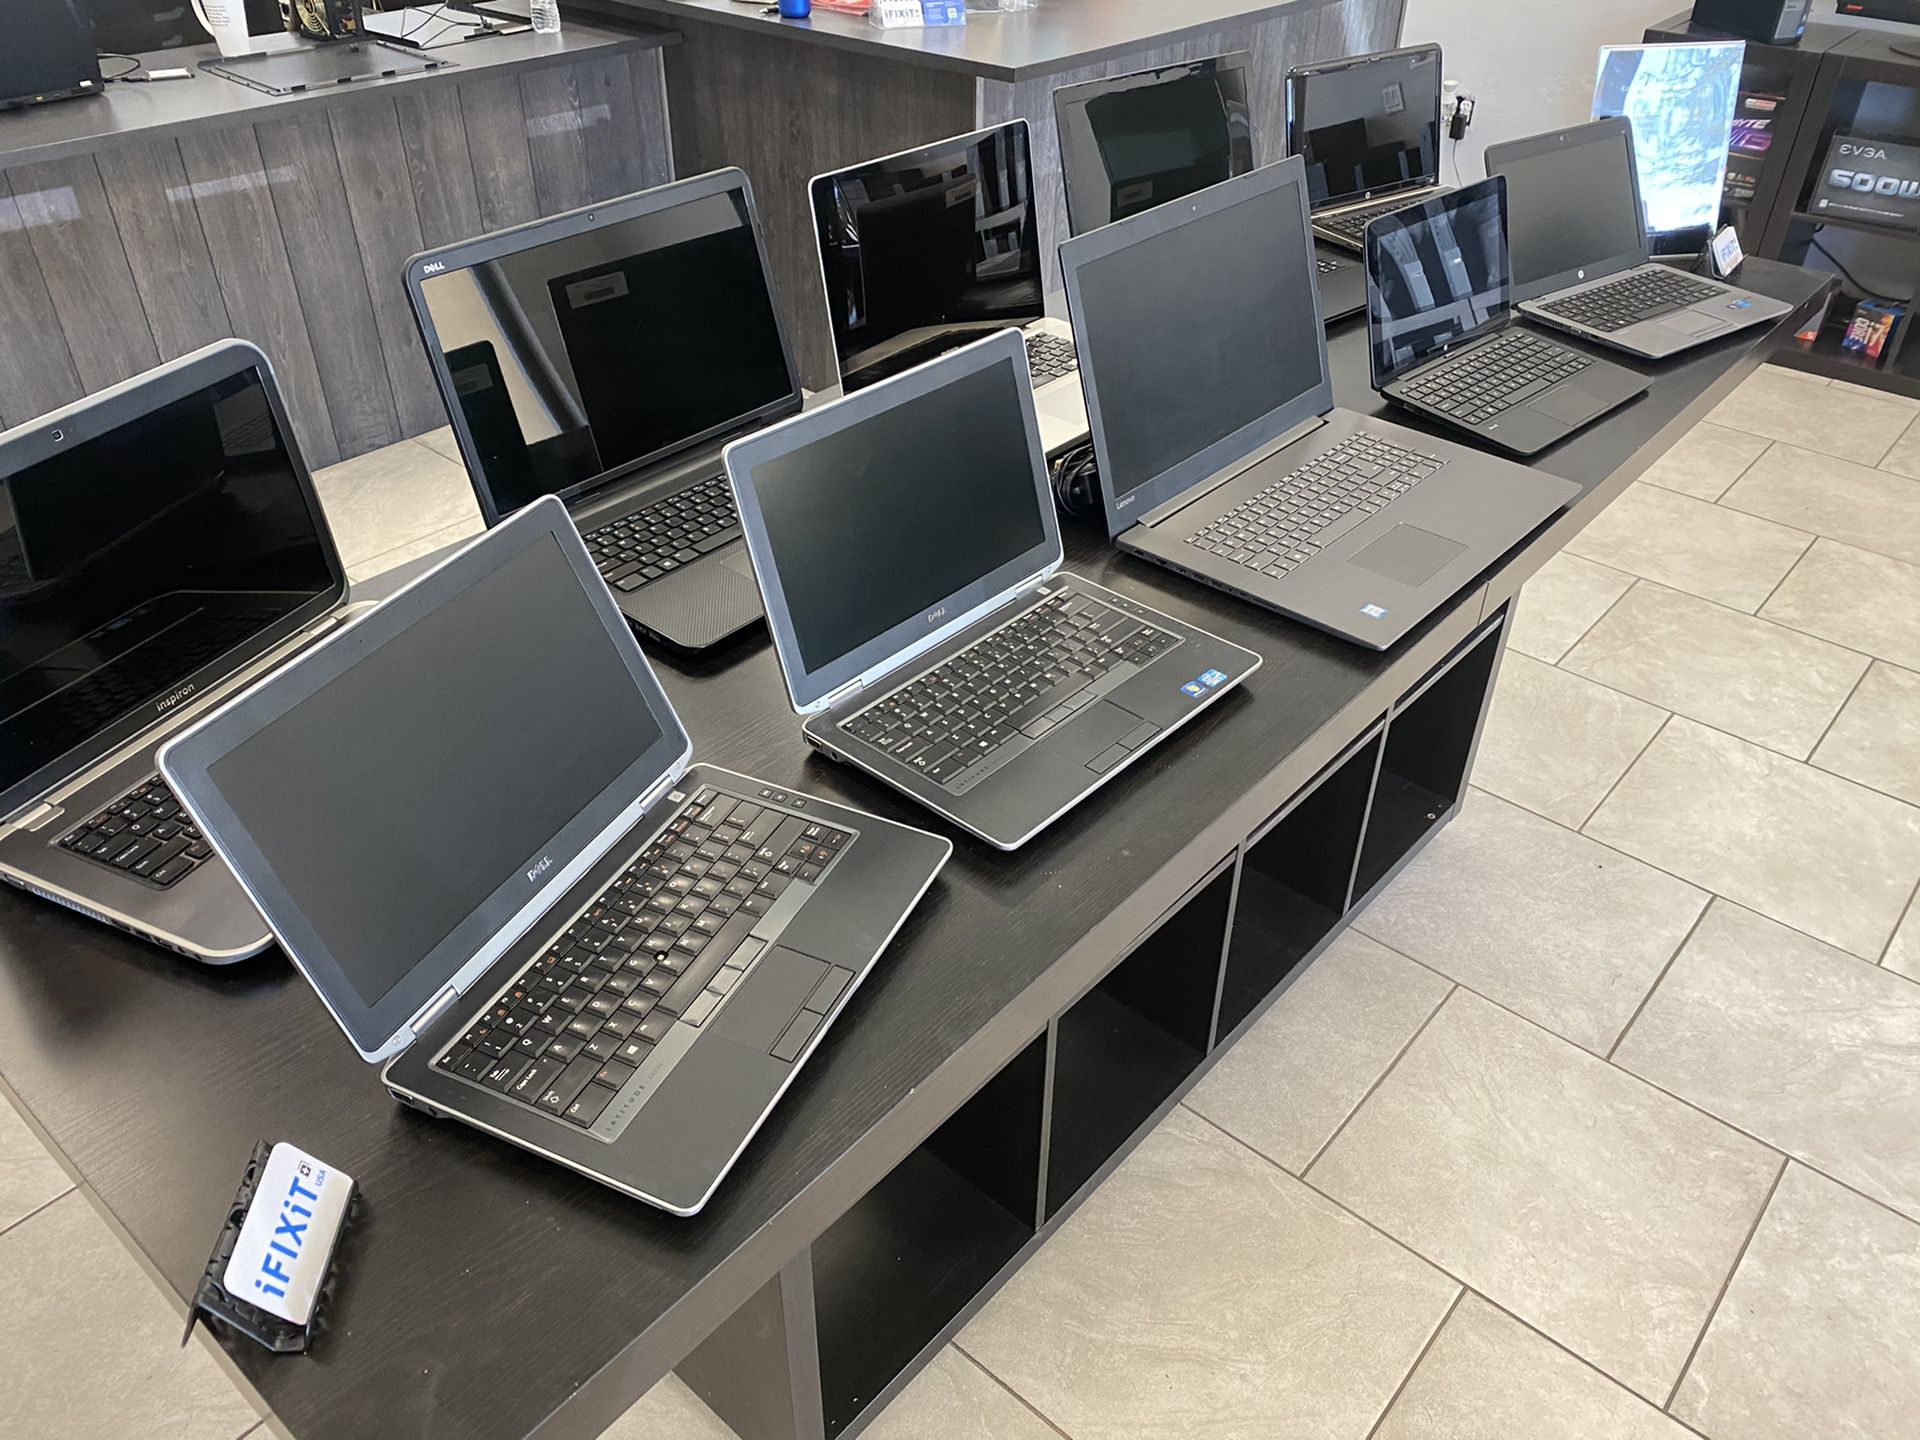 Laptop and Desktop computer sale! Starting at $89